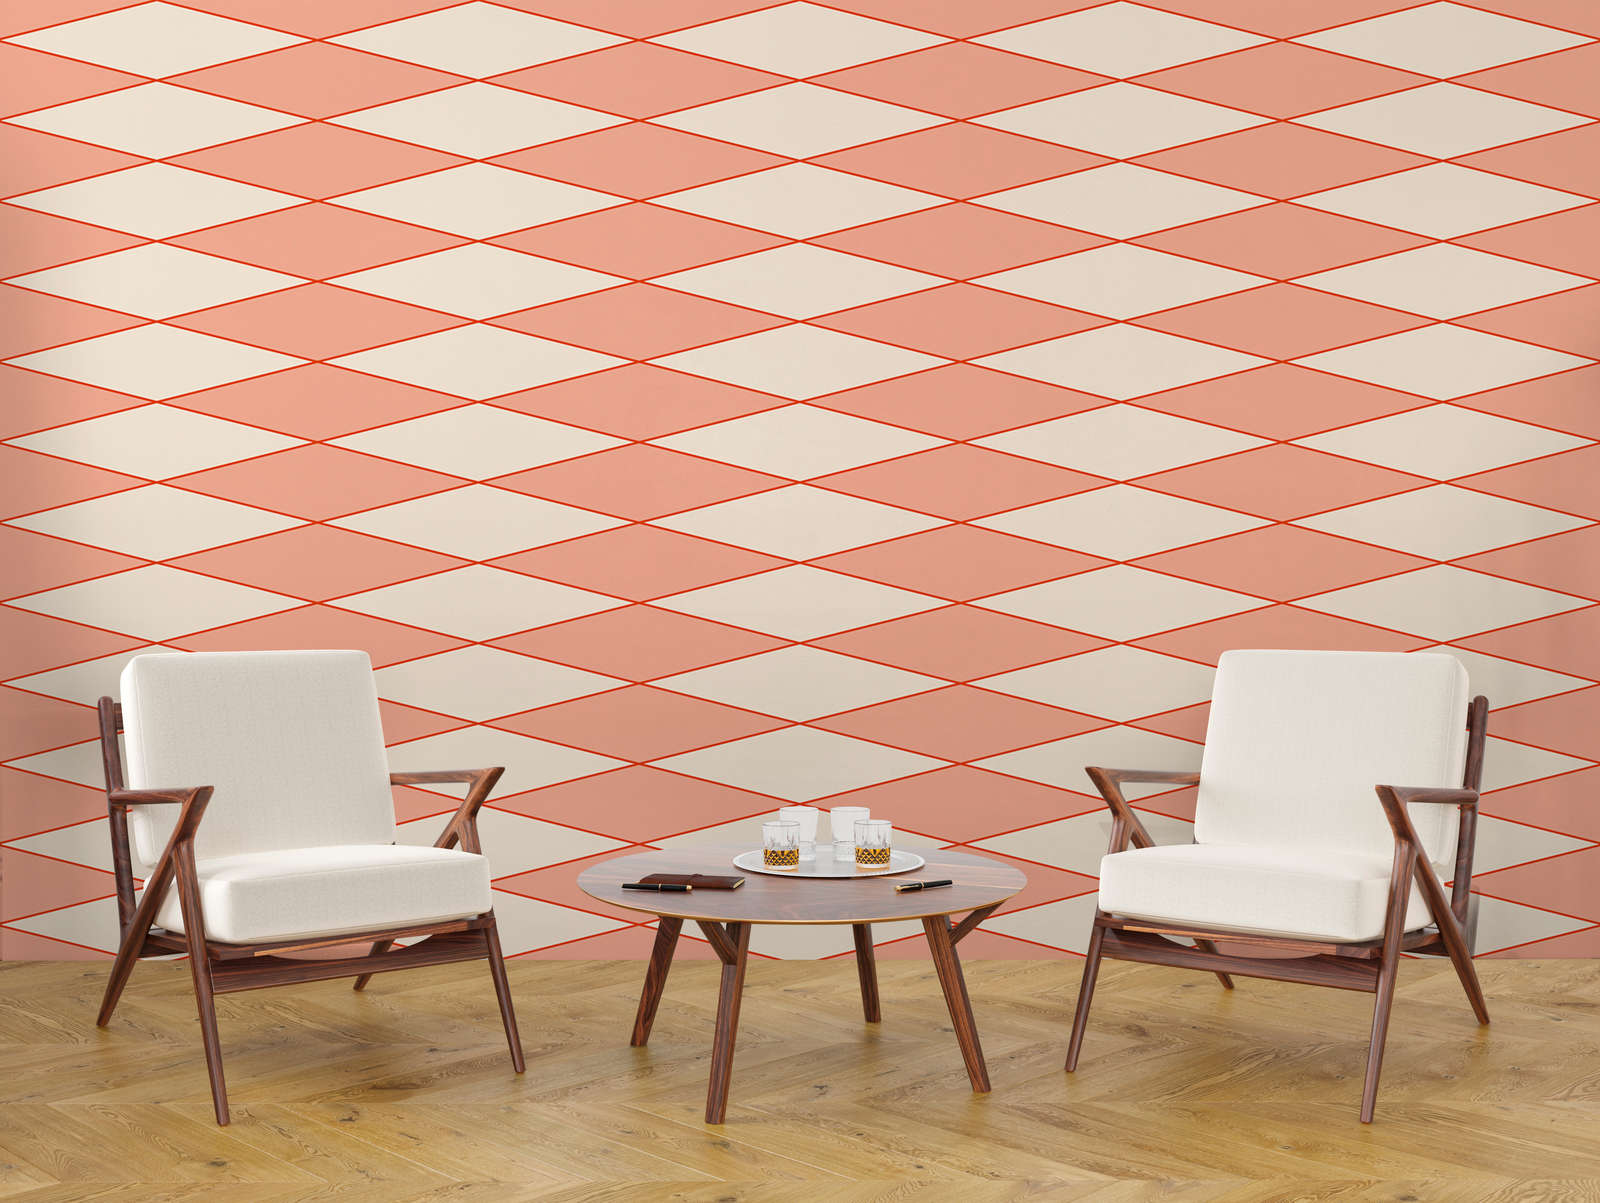             Lozenge & Line Pattern Wallpaper - Orange, Beige | Premium Smooth Non-woven
        